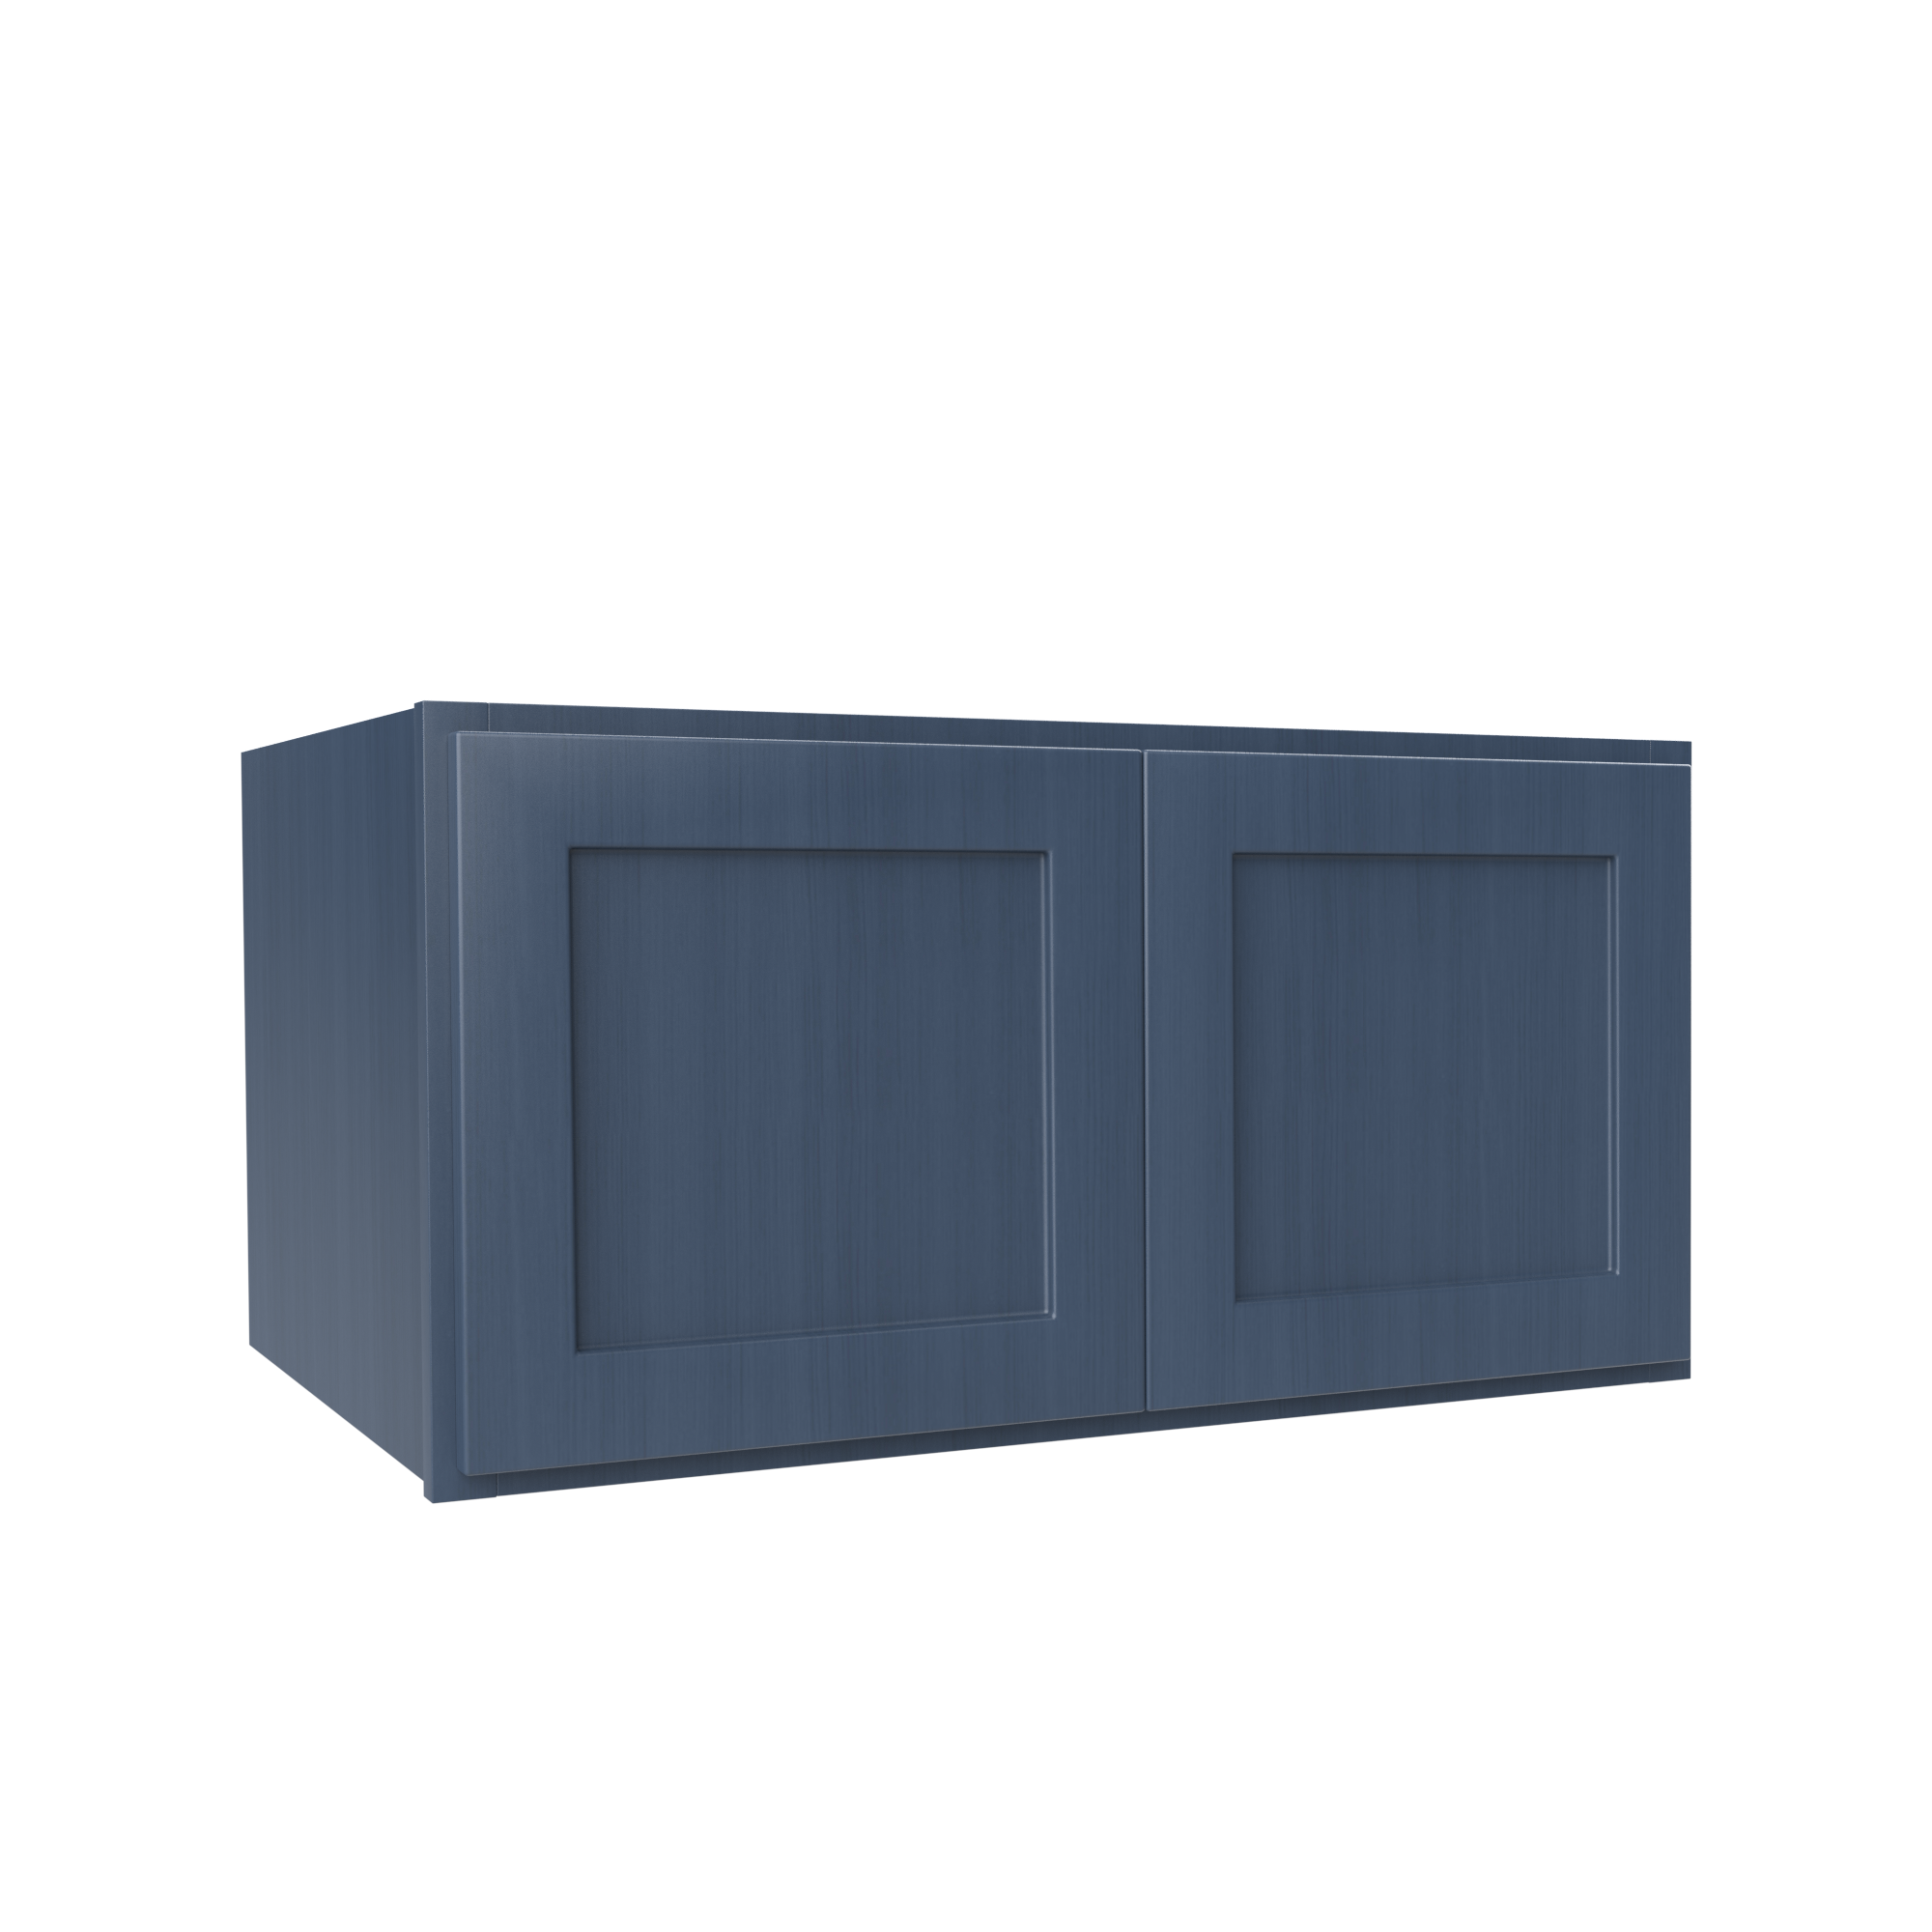 Refrigerator Cabinet - 36W x 18H x 24D - Blue Shaker Cabinet